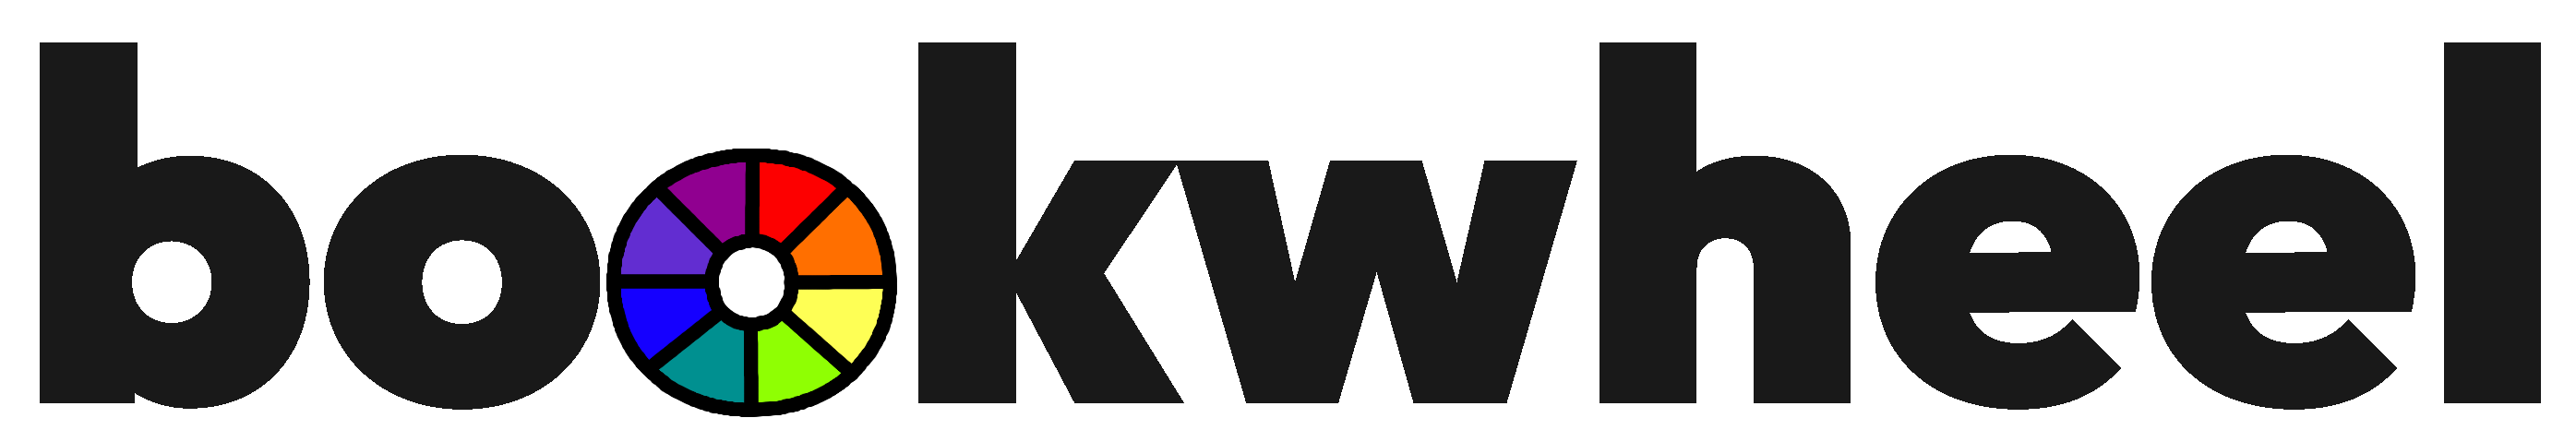 Bookwheel Logo